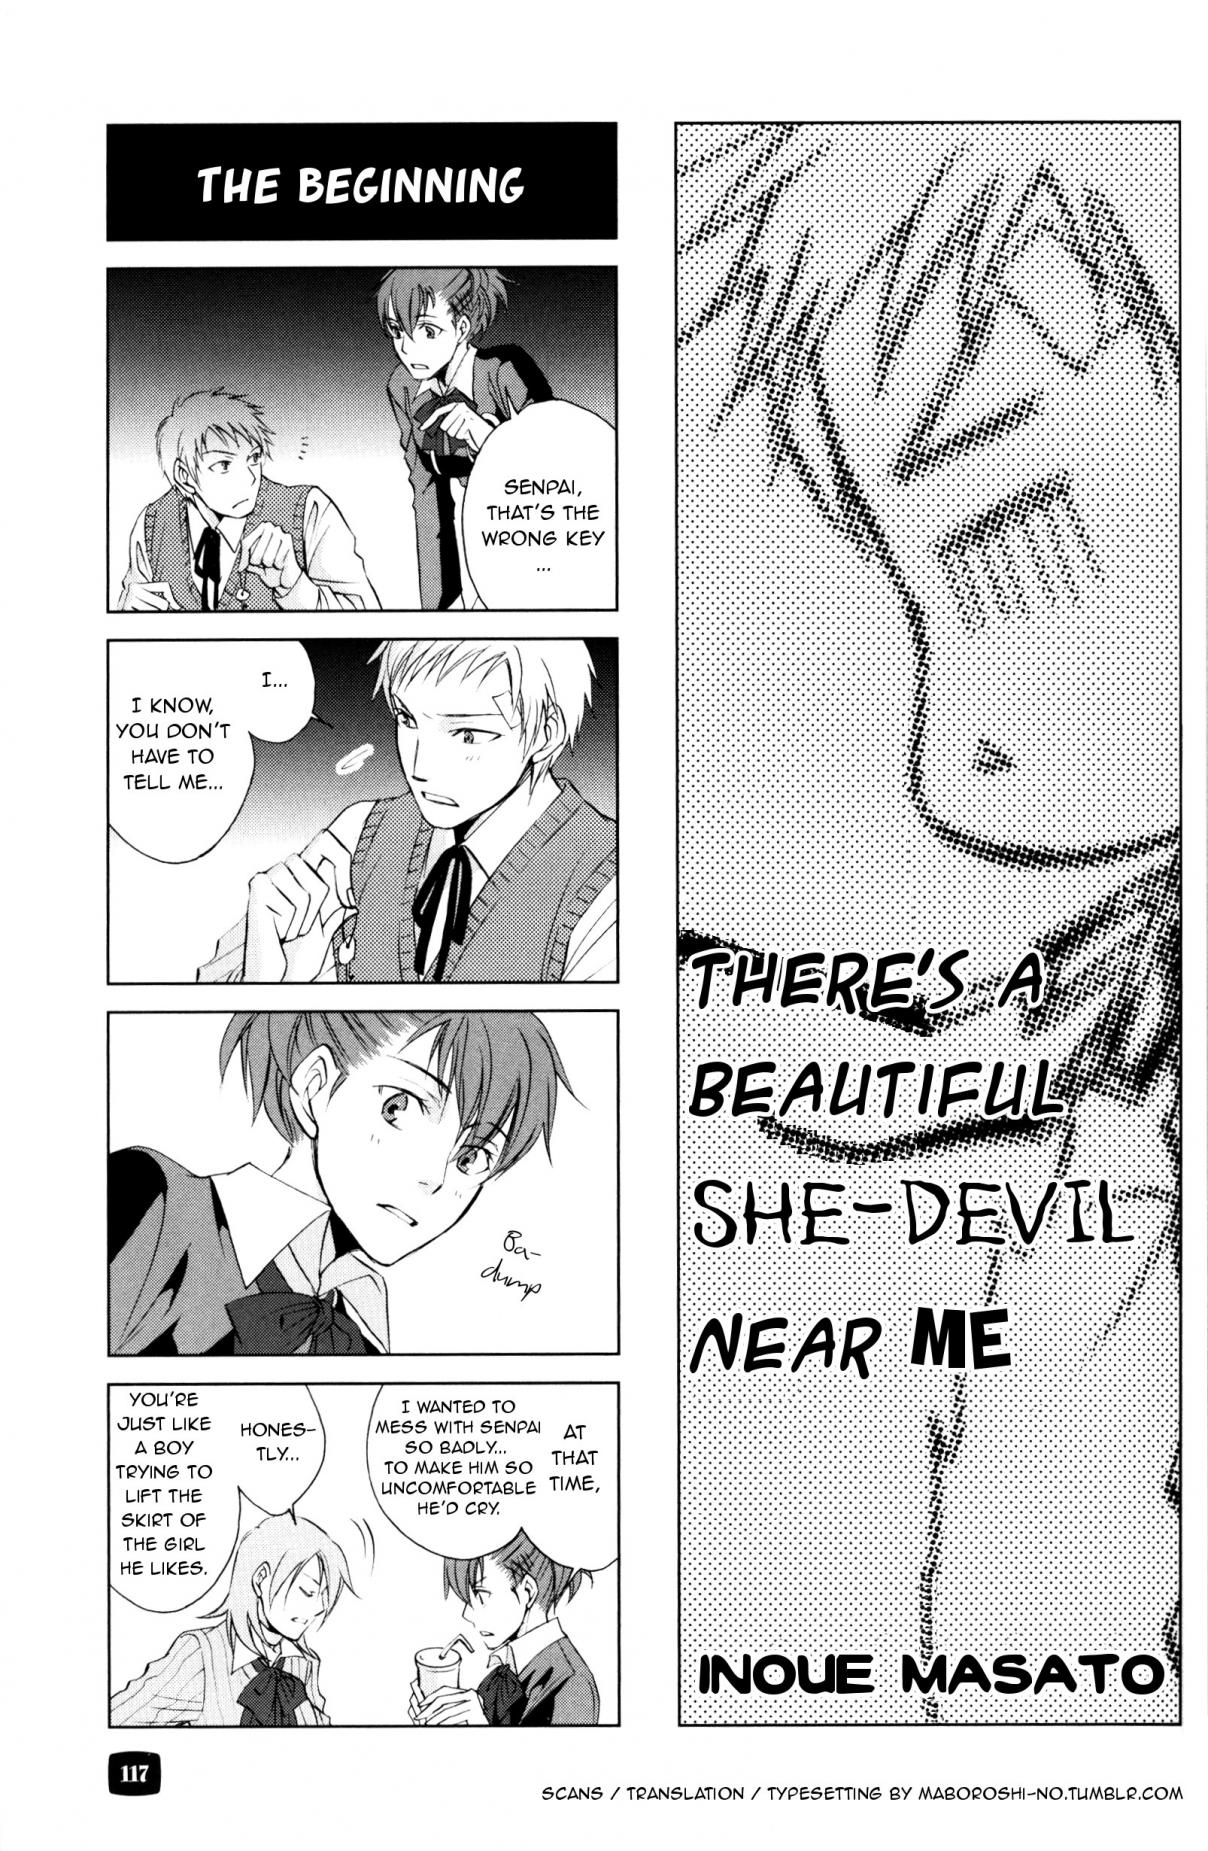 Persona 3 Portable 4 Koma Kingdom Girls Side Vol. 2 Ch. 22 There's a beautiful she devil near me